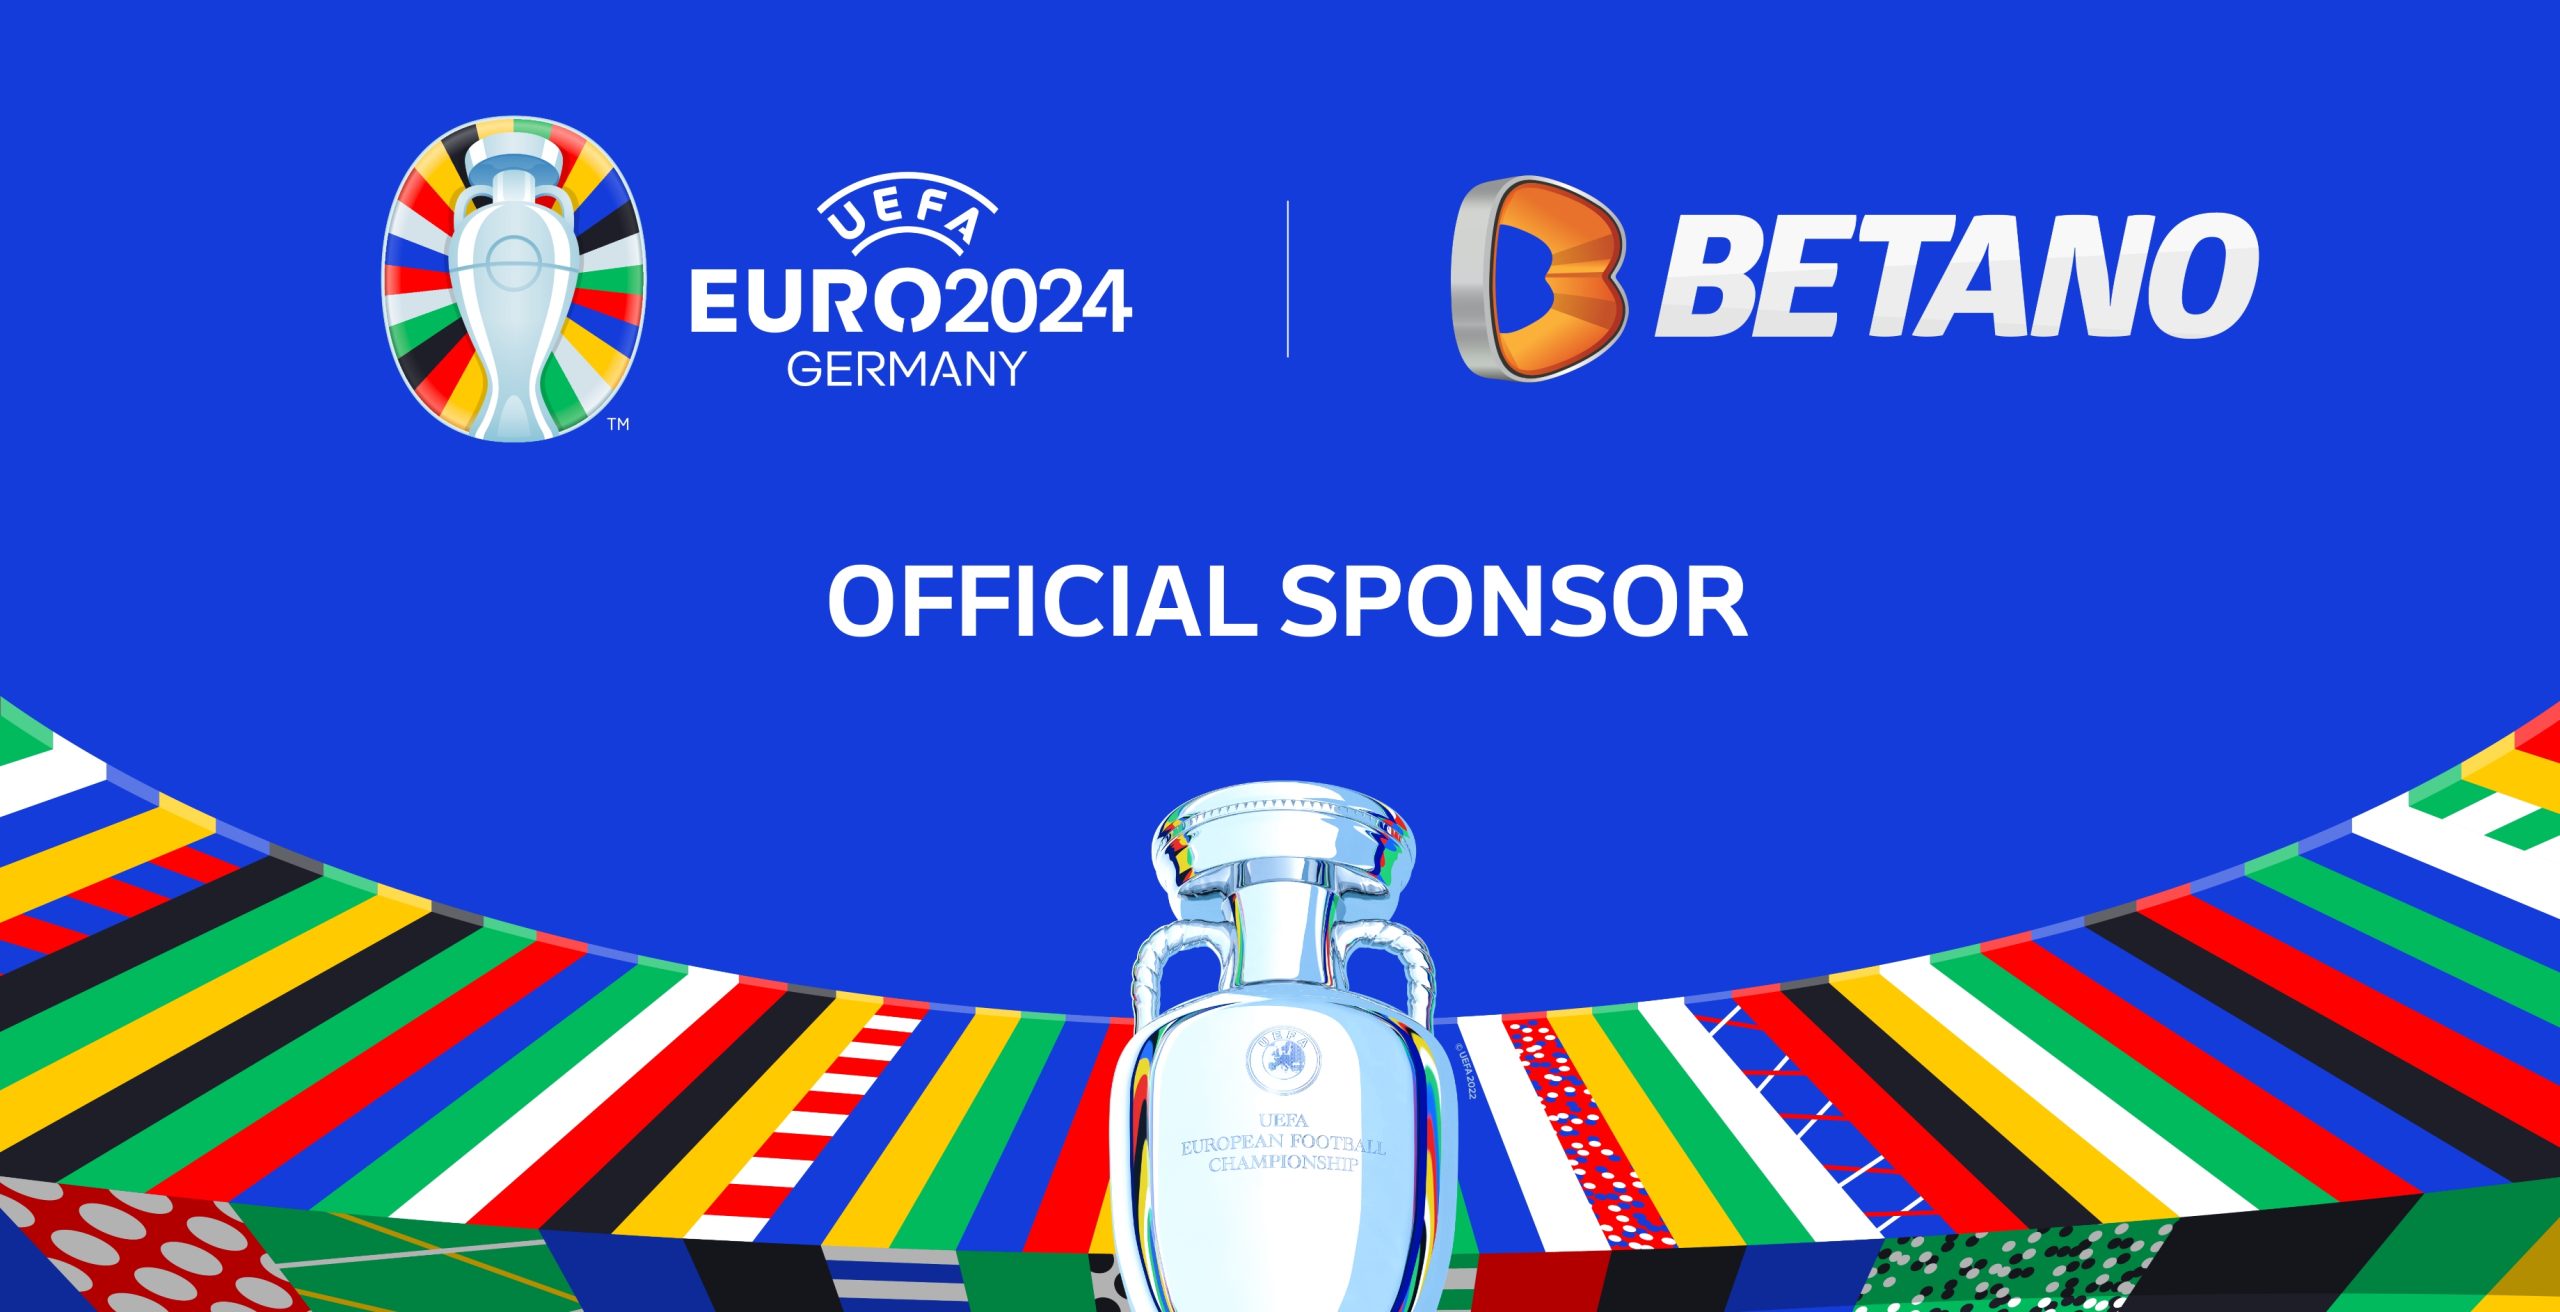 Betano becomes official sponsor of Euro 2024 3